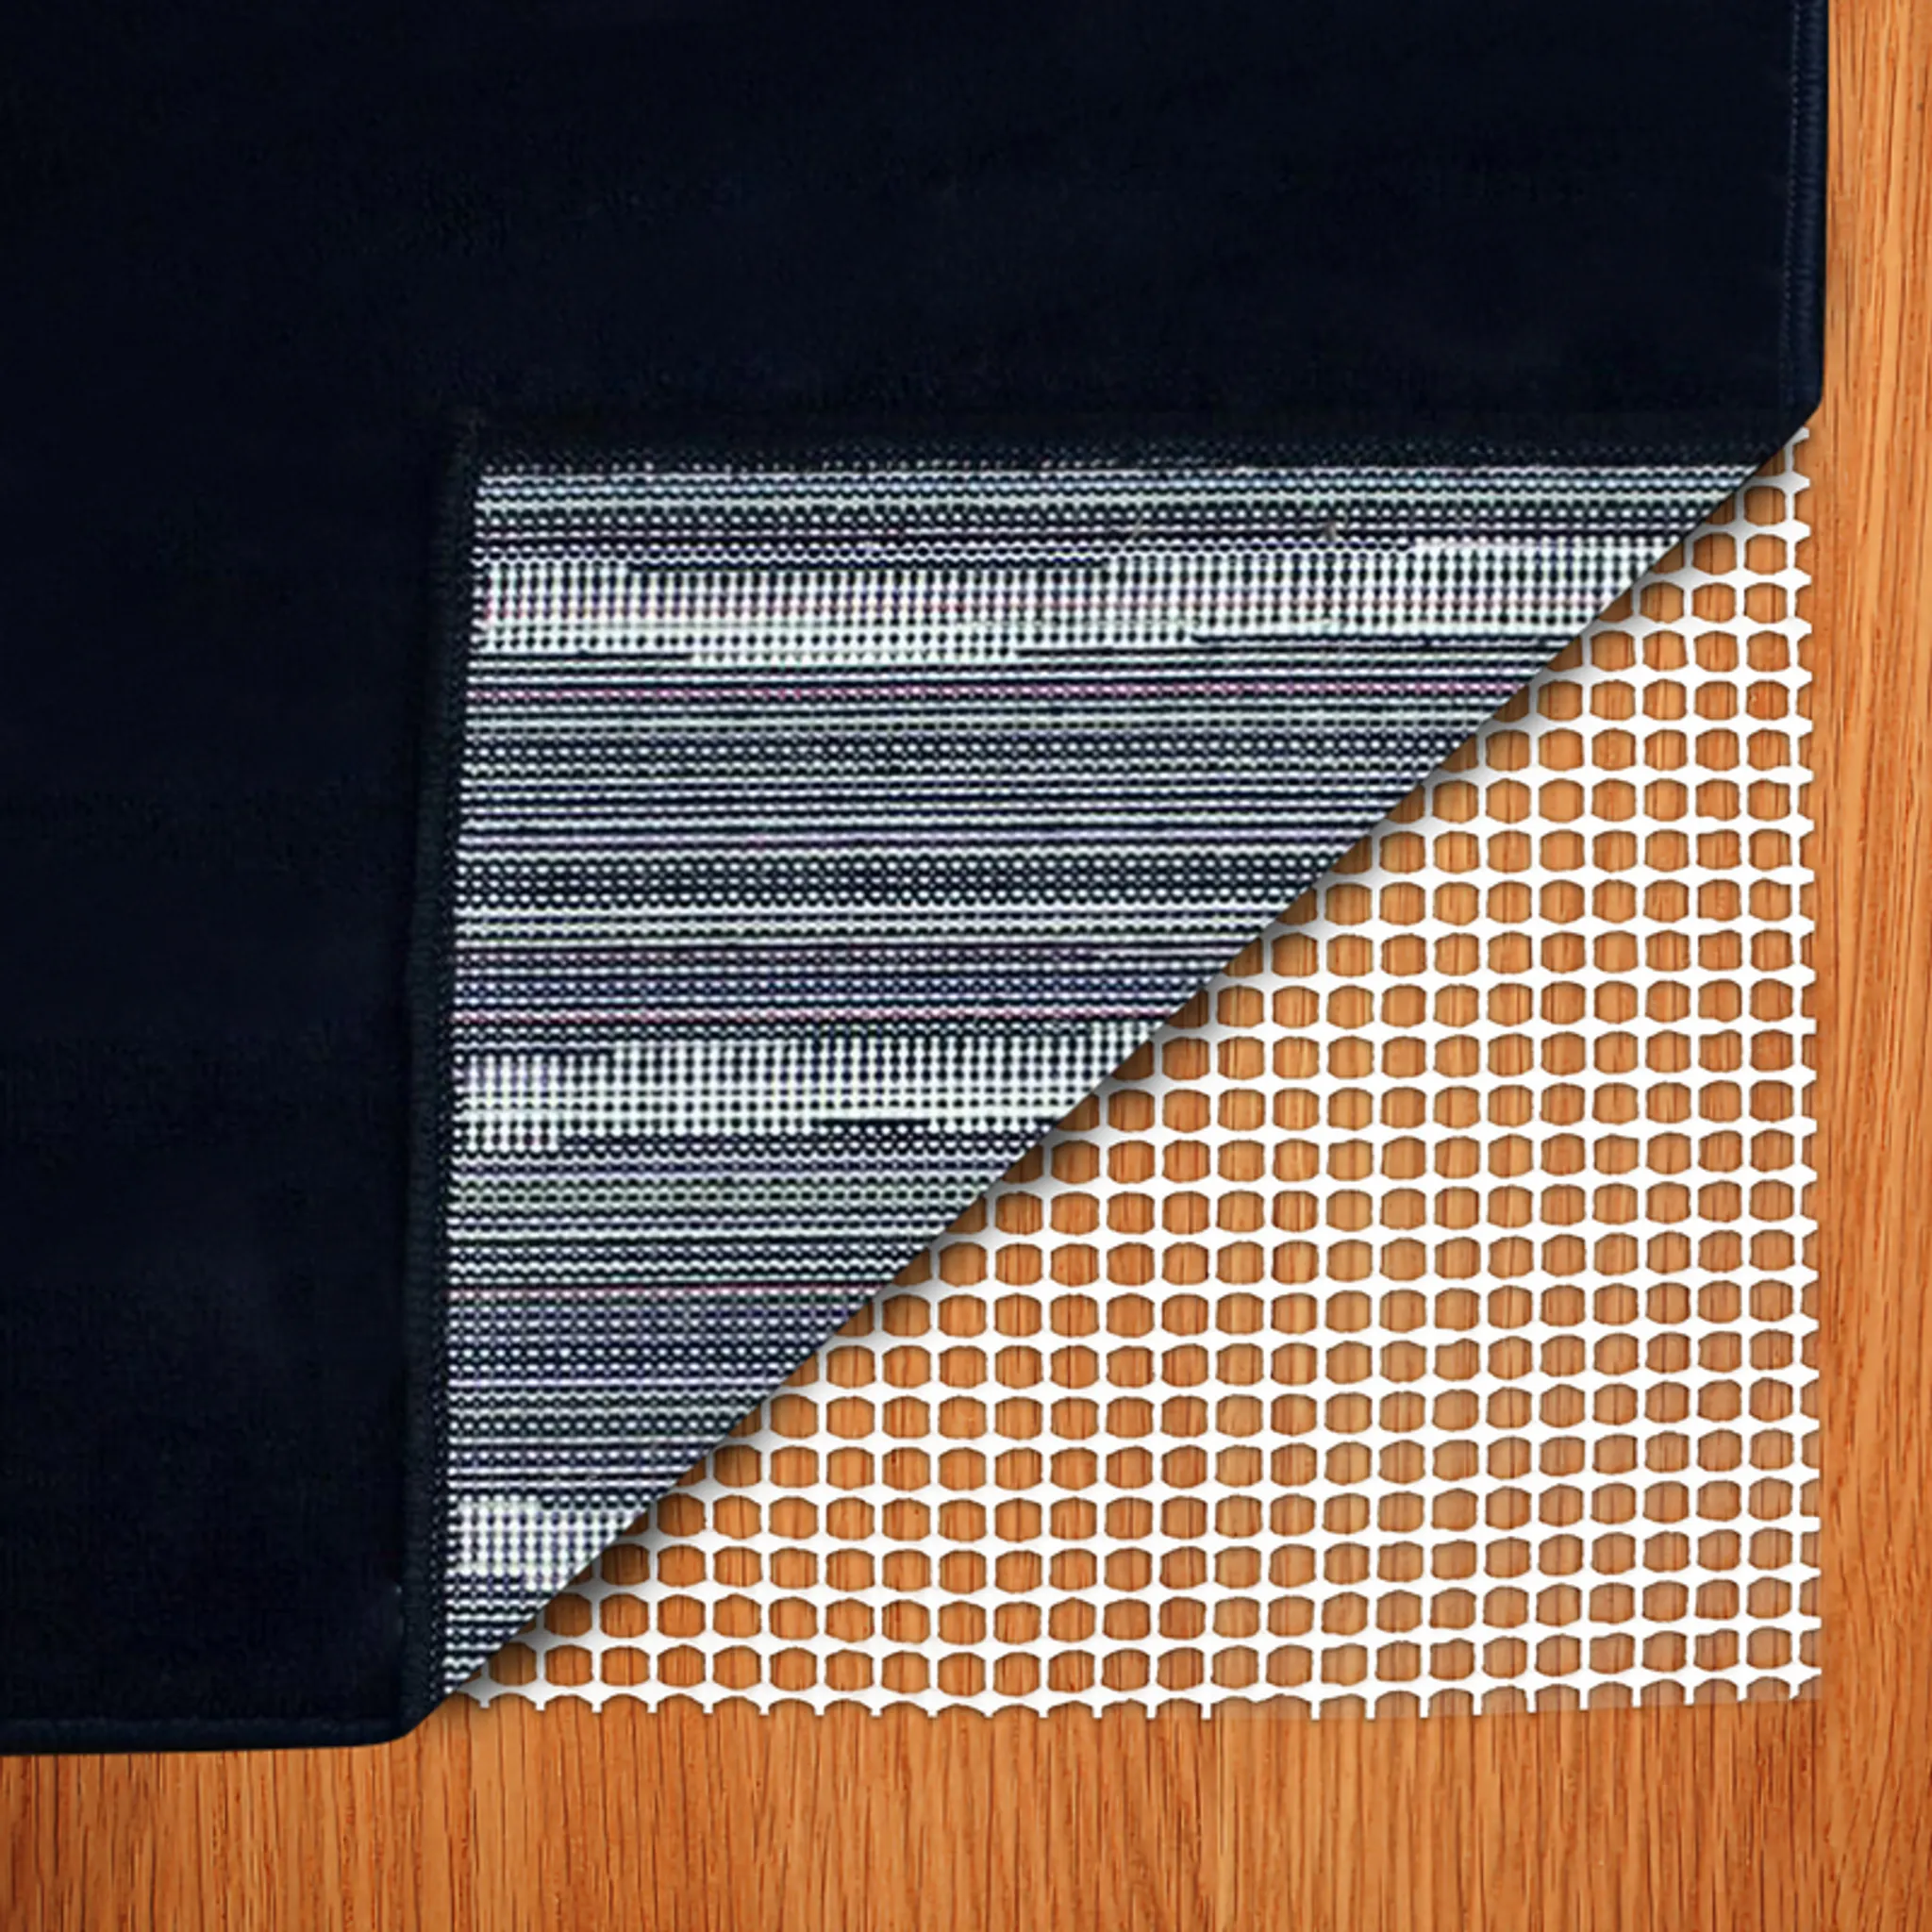 Teppich-Anti-Rutschmatte «Luxterton S» 60 x 120 cm